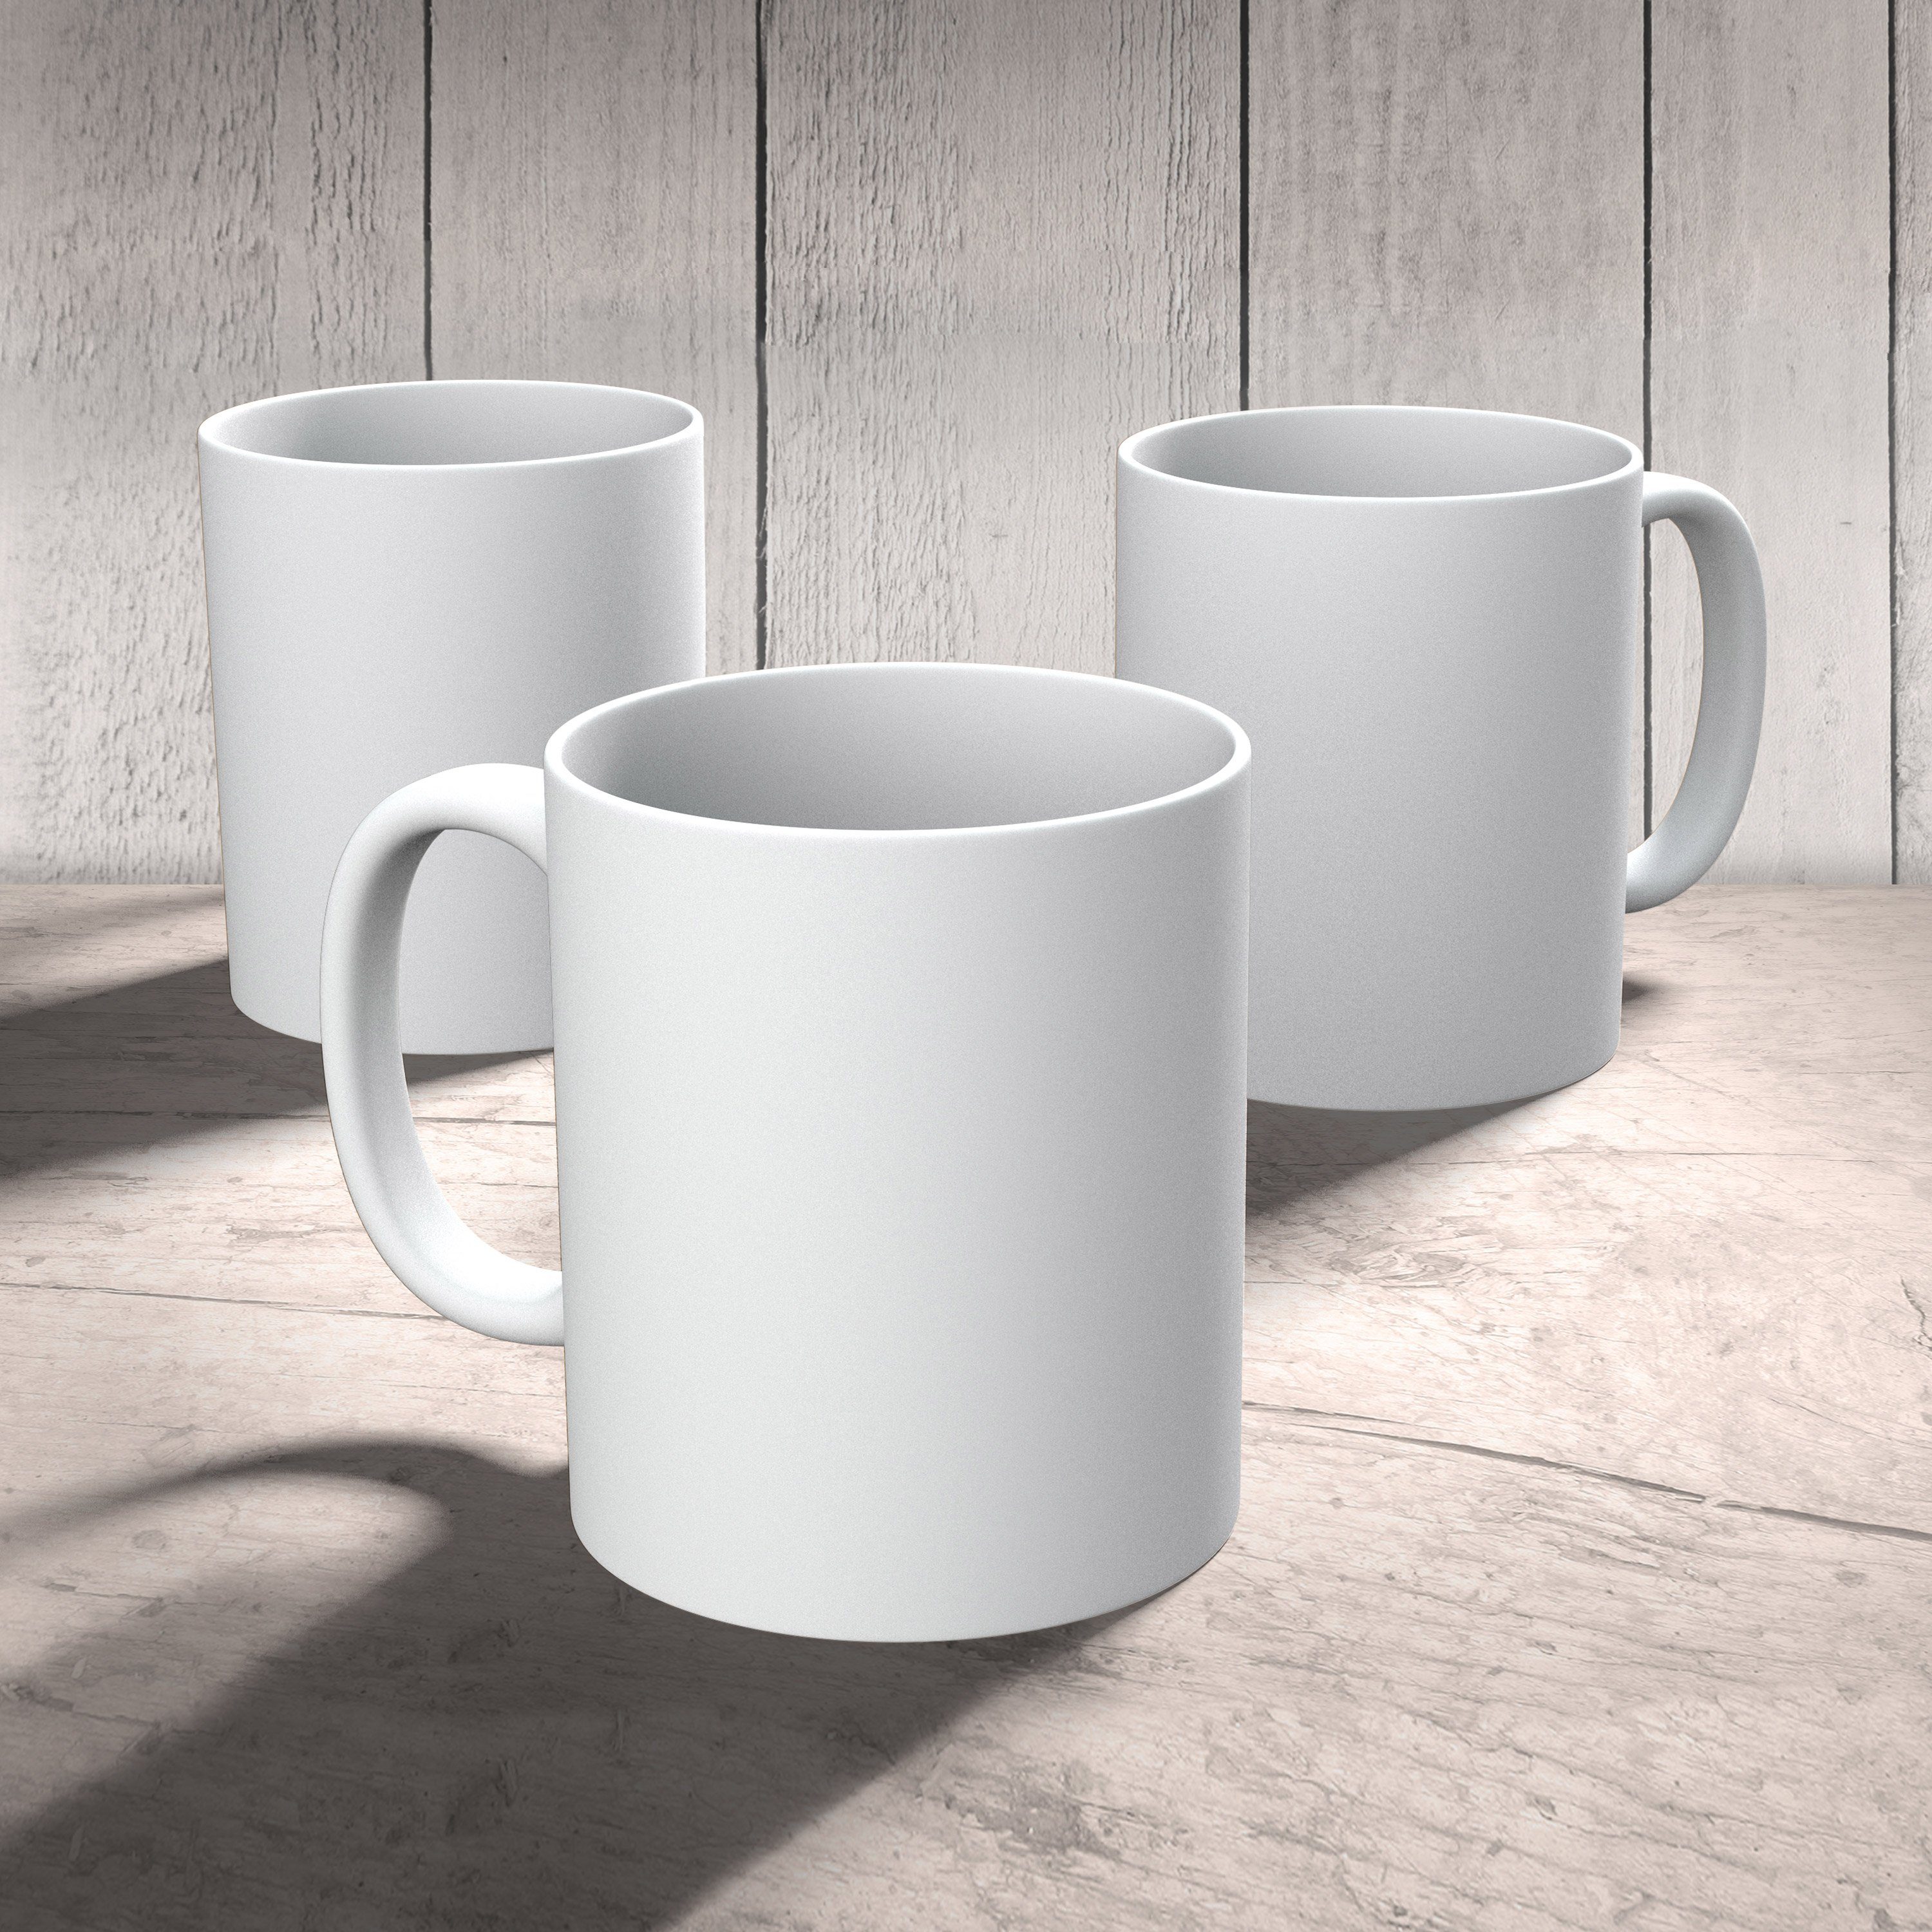 Bester der Weiß Teetasse, Keramik - & Welt Panda Ka, Tischler Mr. Kaffeetasse, - Geschenk, Tasse Mrs.